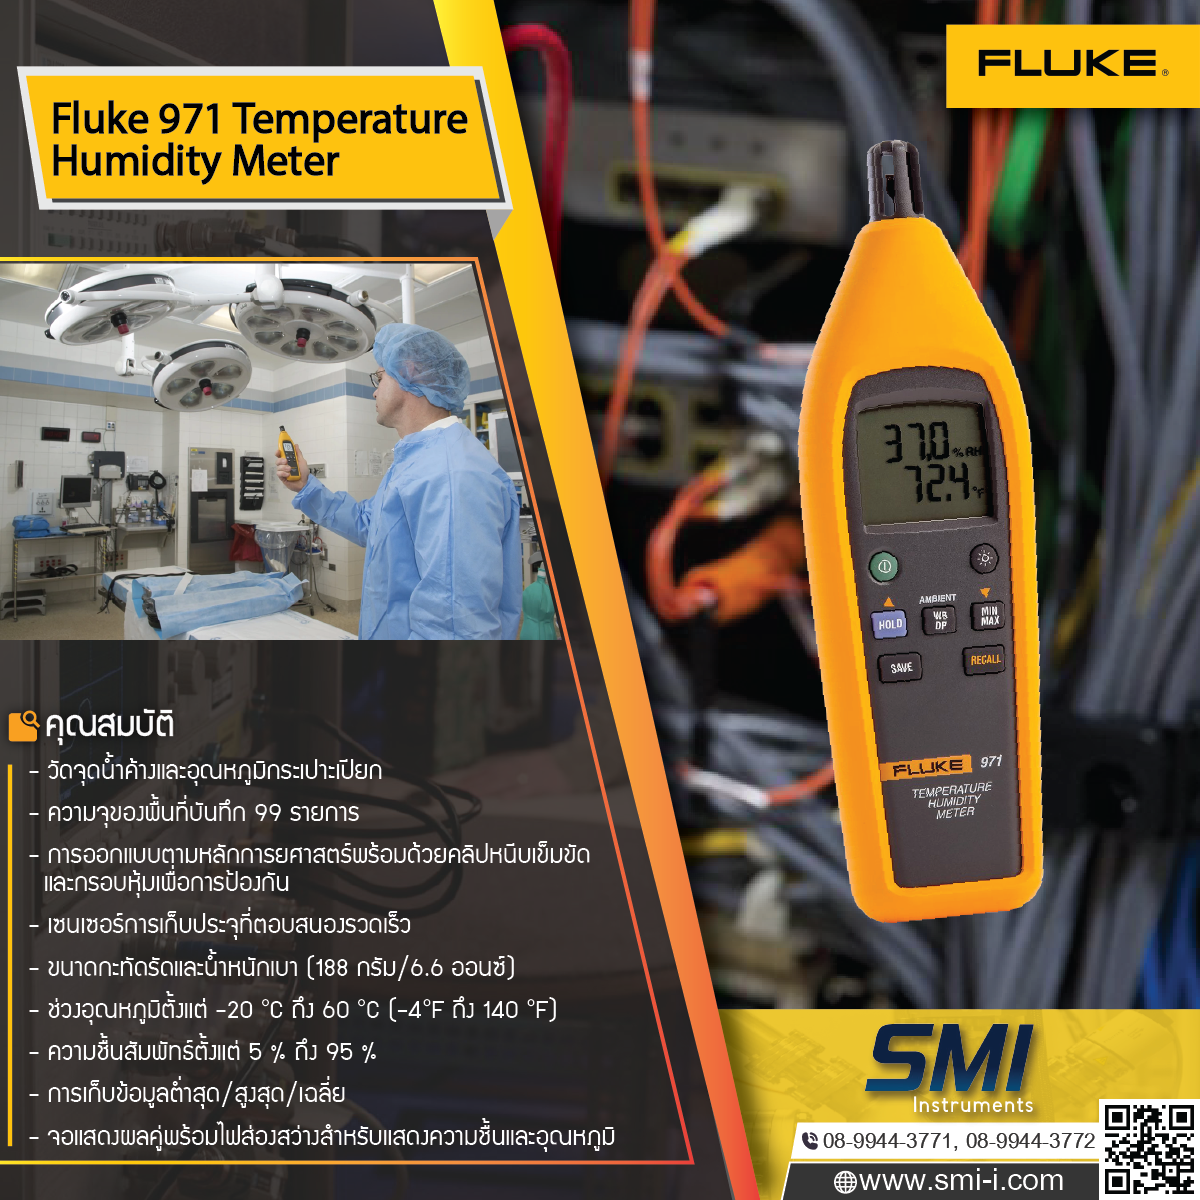 FLUKE - 971 Temperature Humidity Meter graphic information